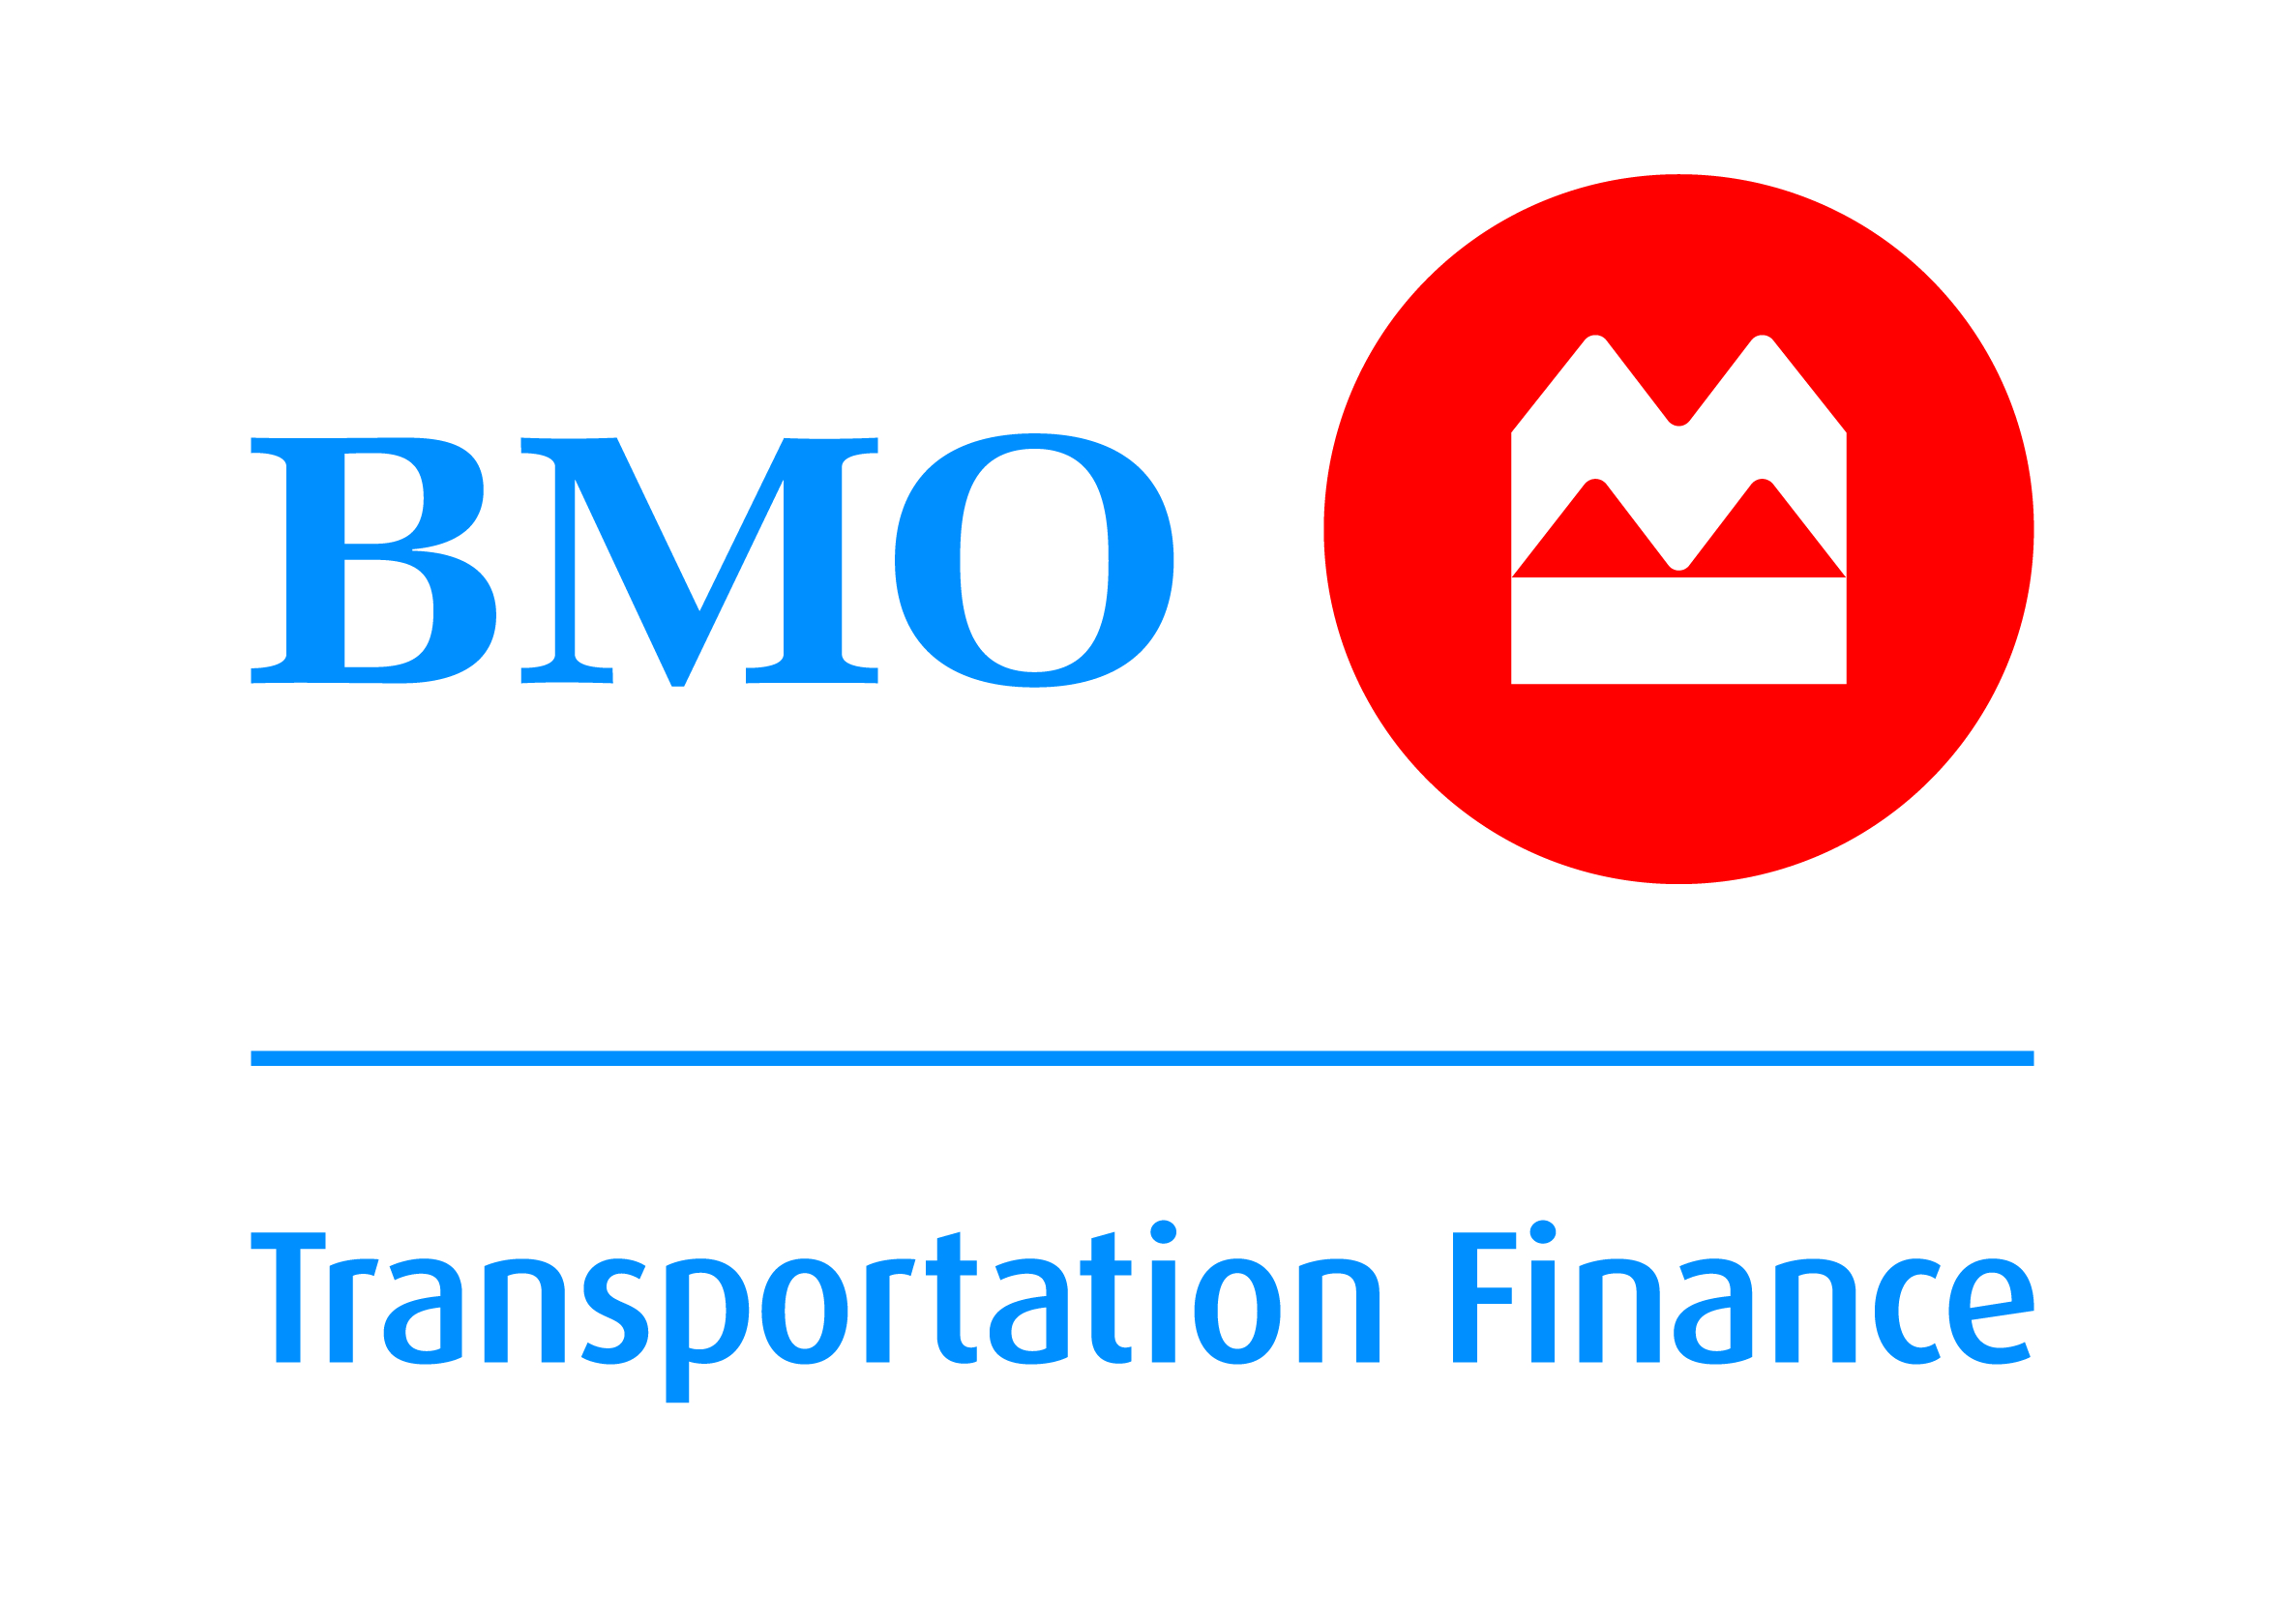 BMO Transportation Finance